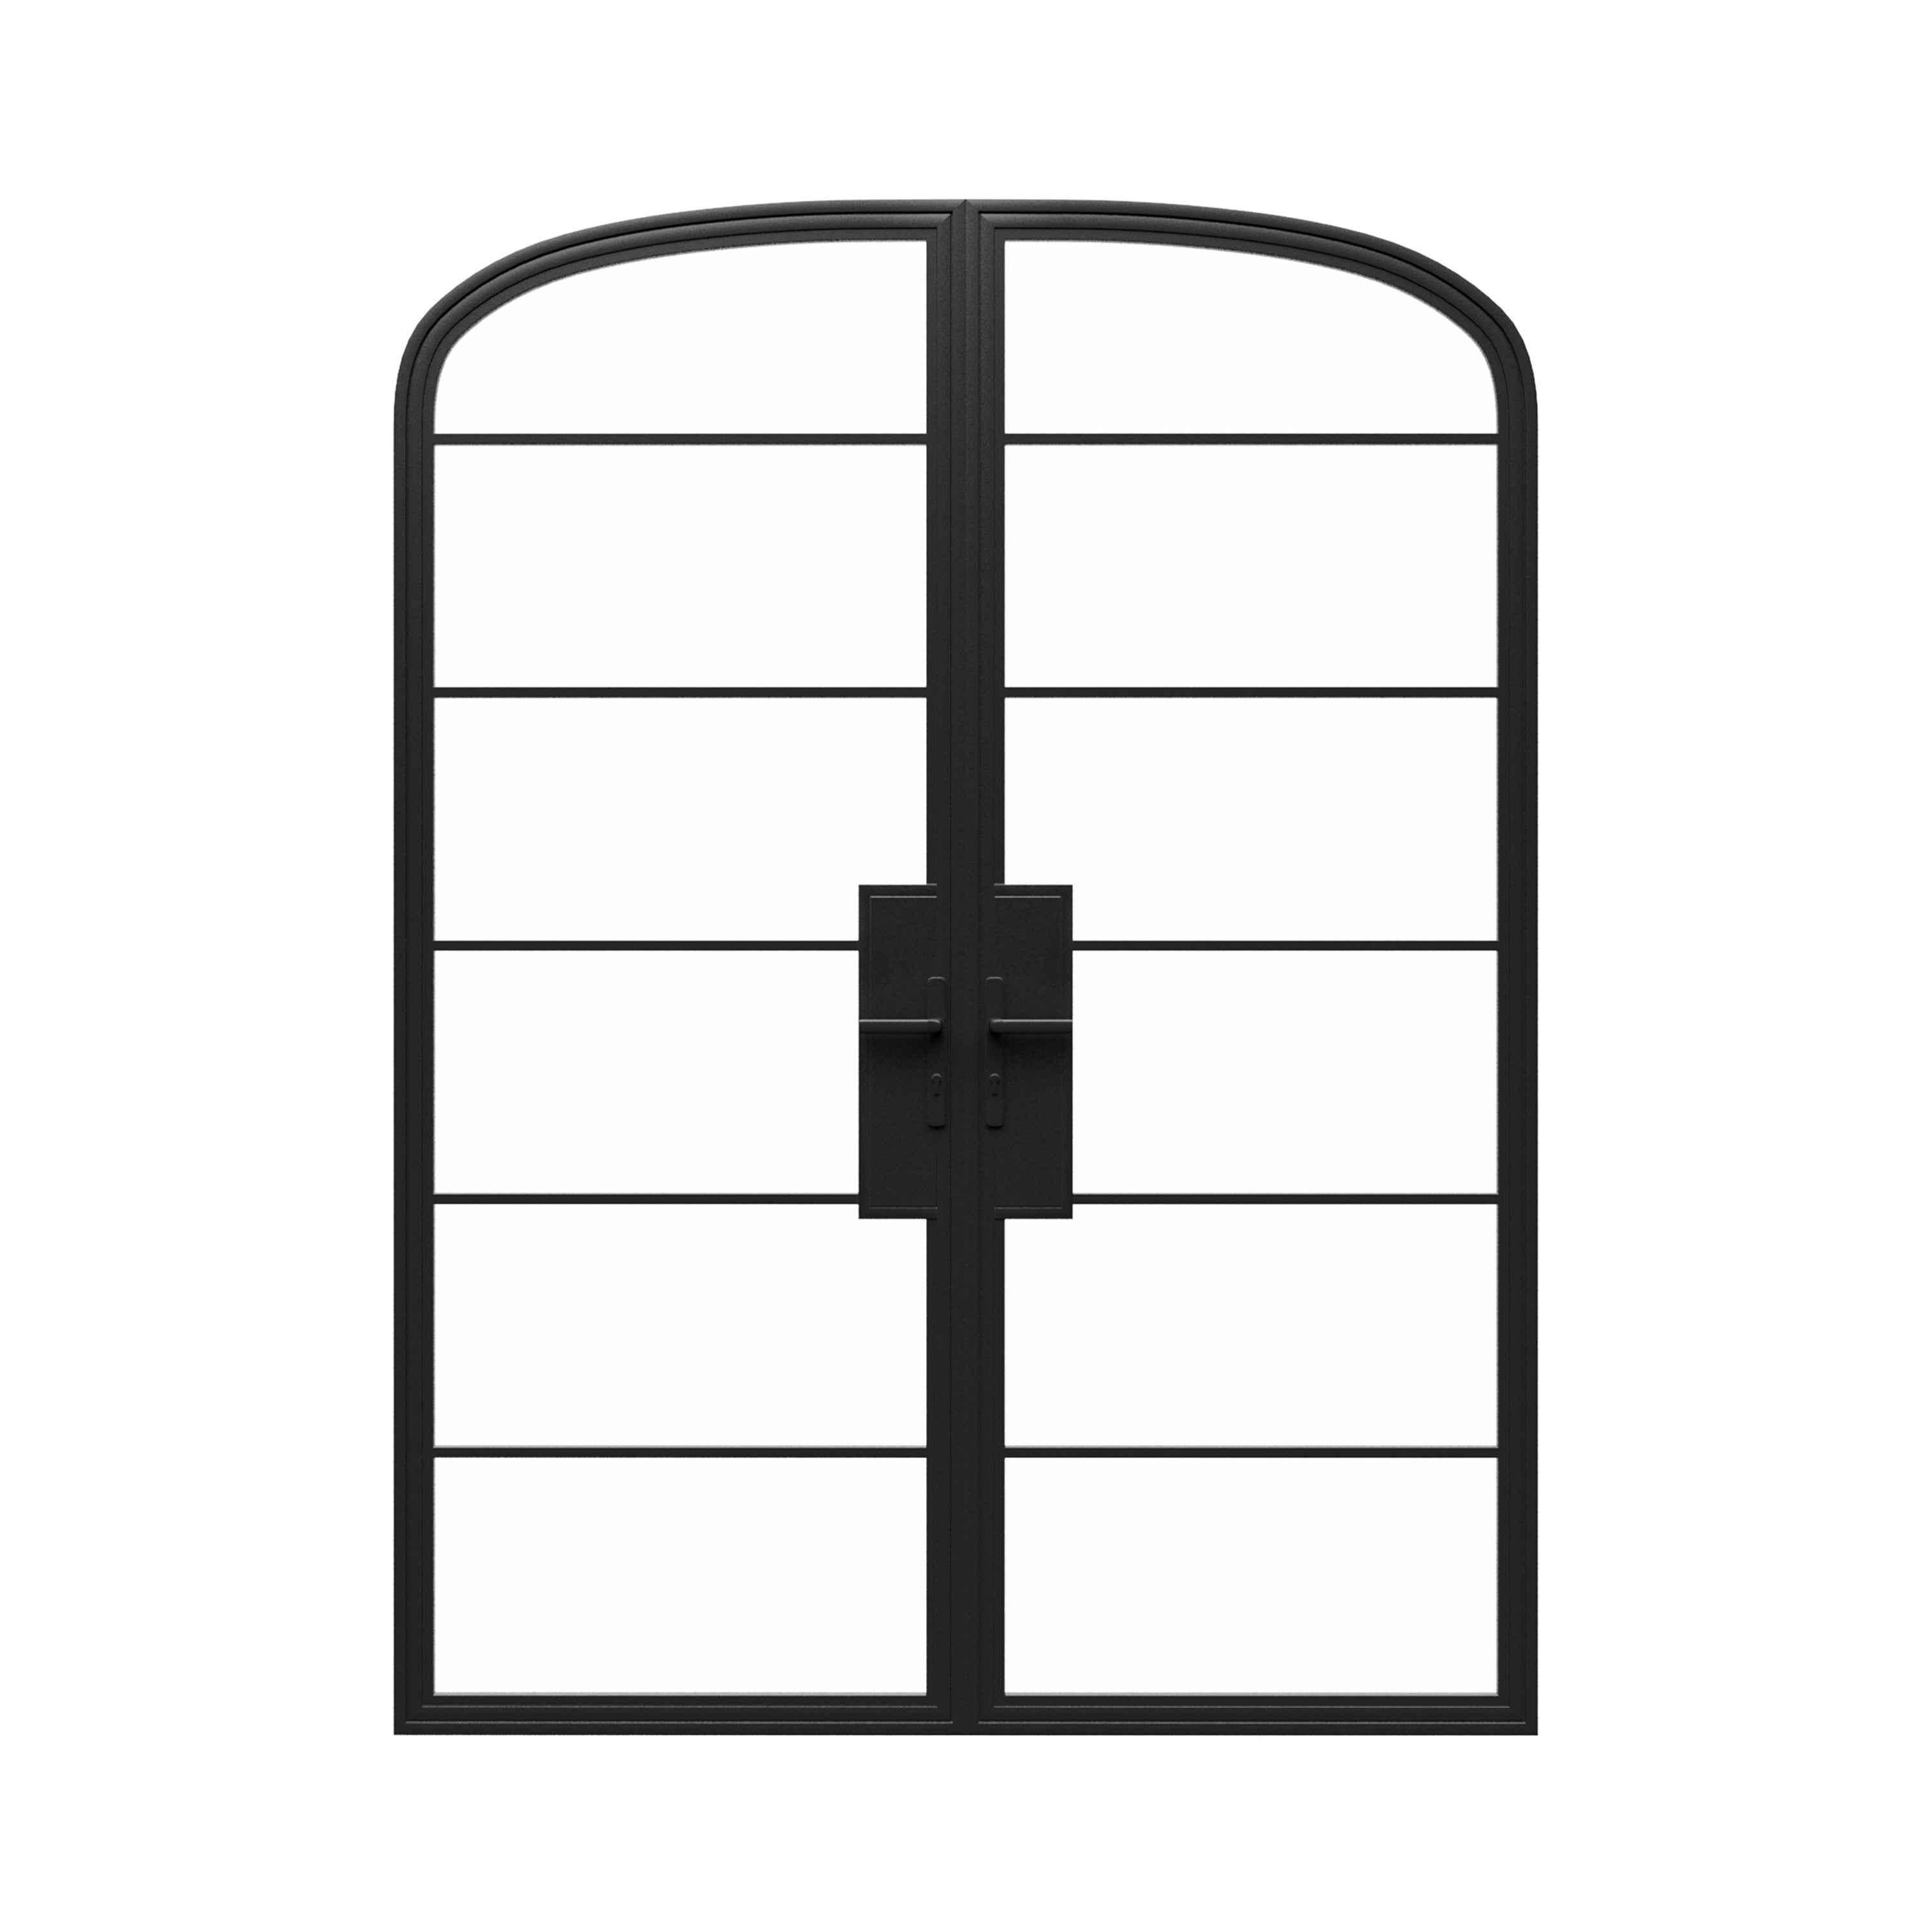 Mini Arch Steel Metal Double Doors - Iron Glass